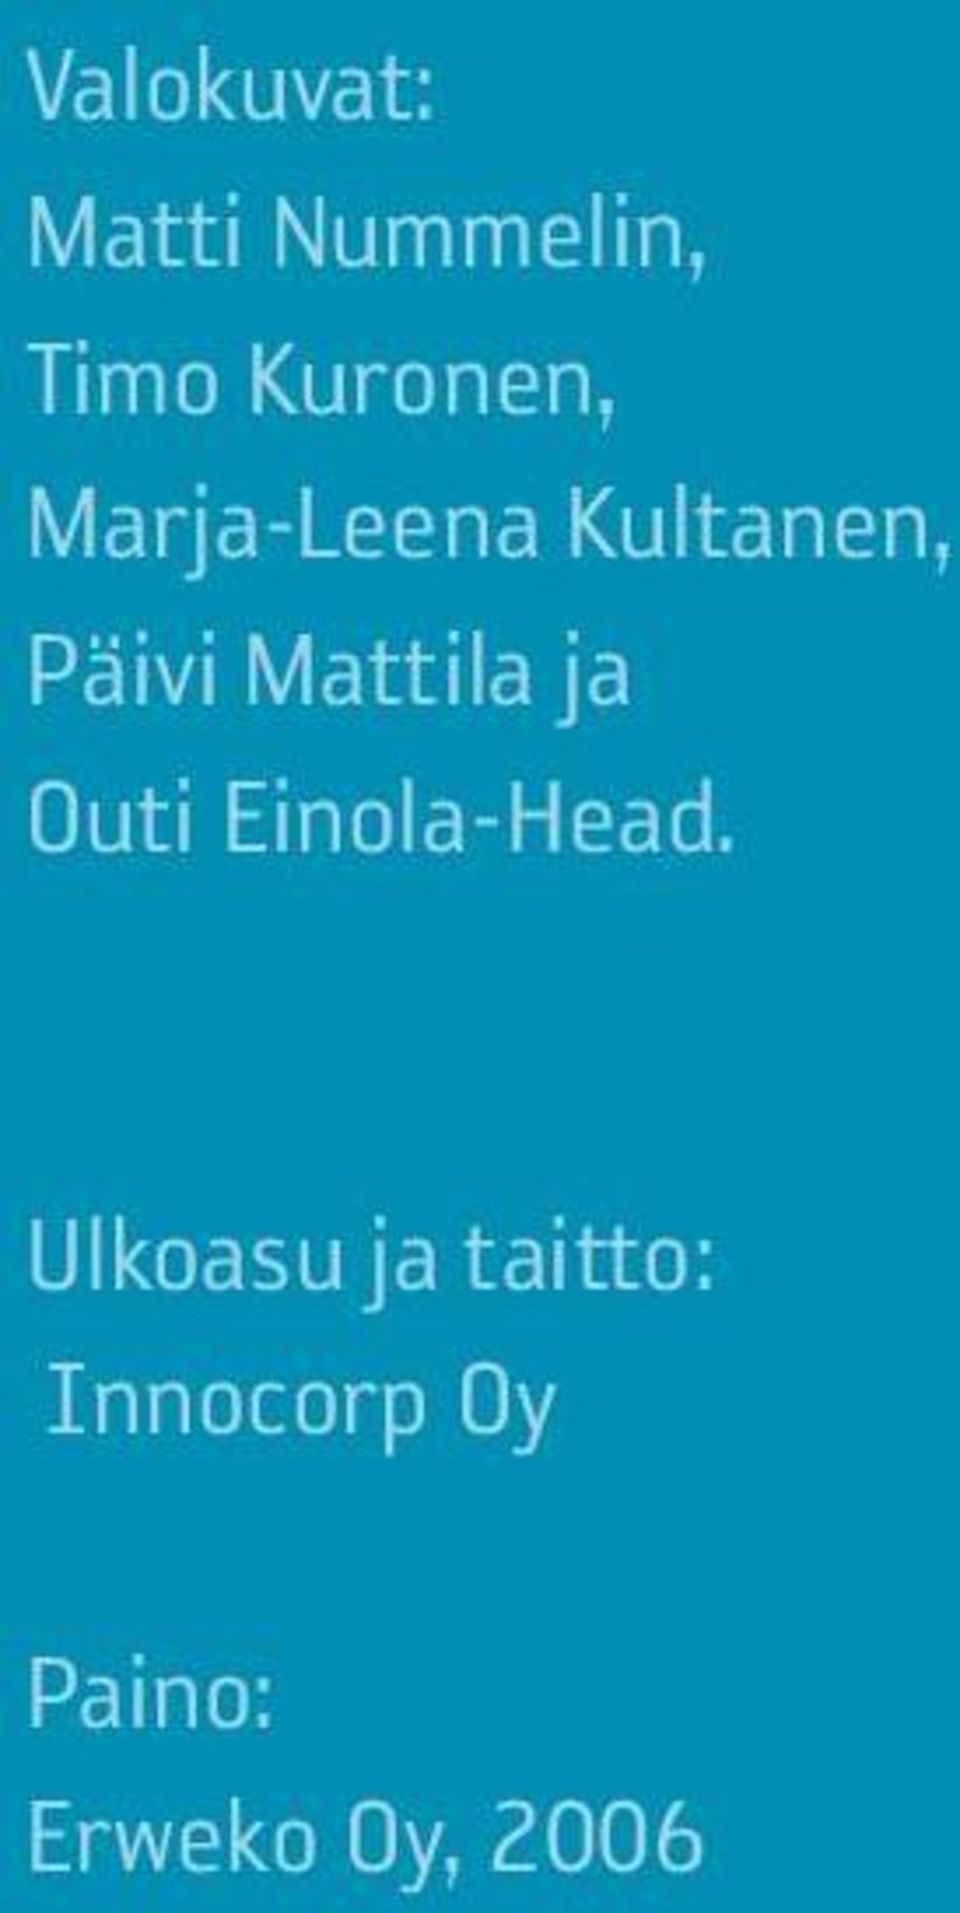 Mattila ja Outi Einola-Head.